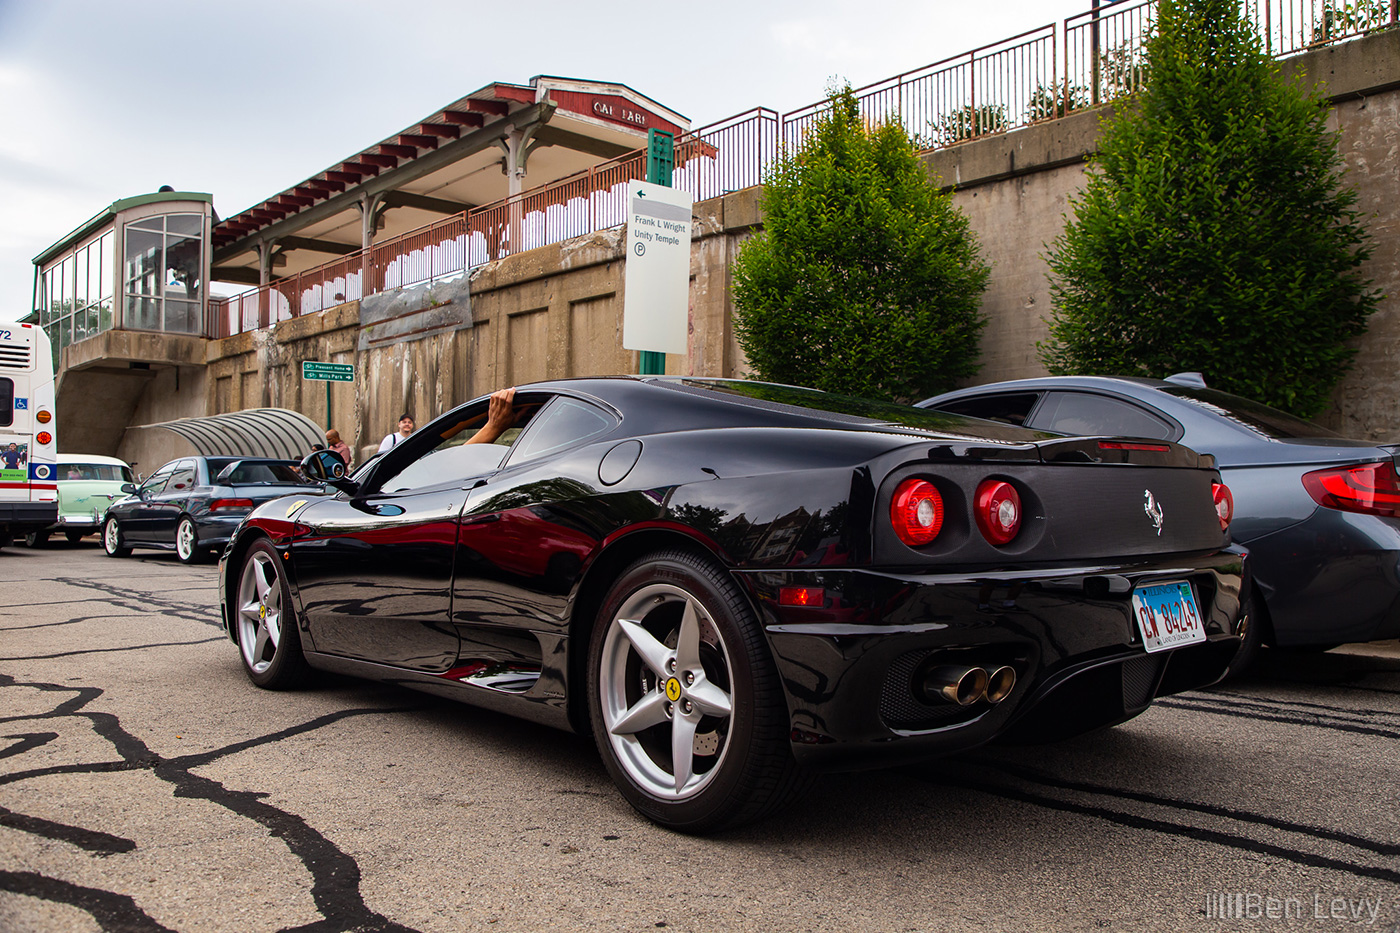 Black Ferrari 360 Modena in Oak  Park, IL